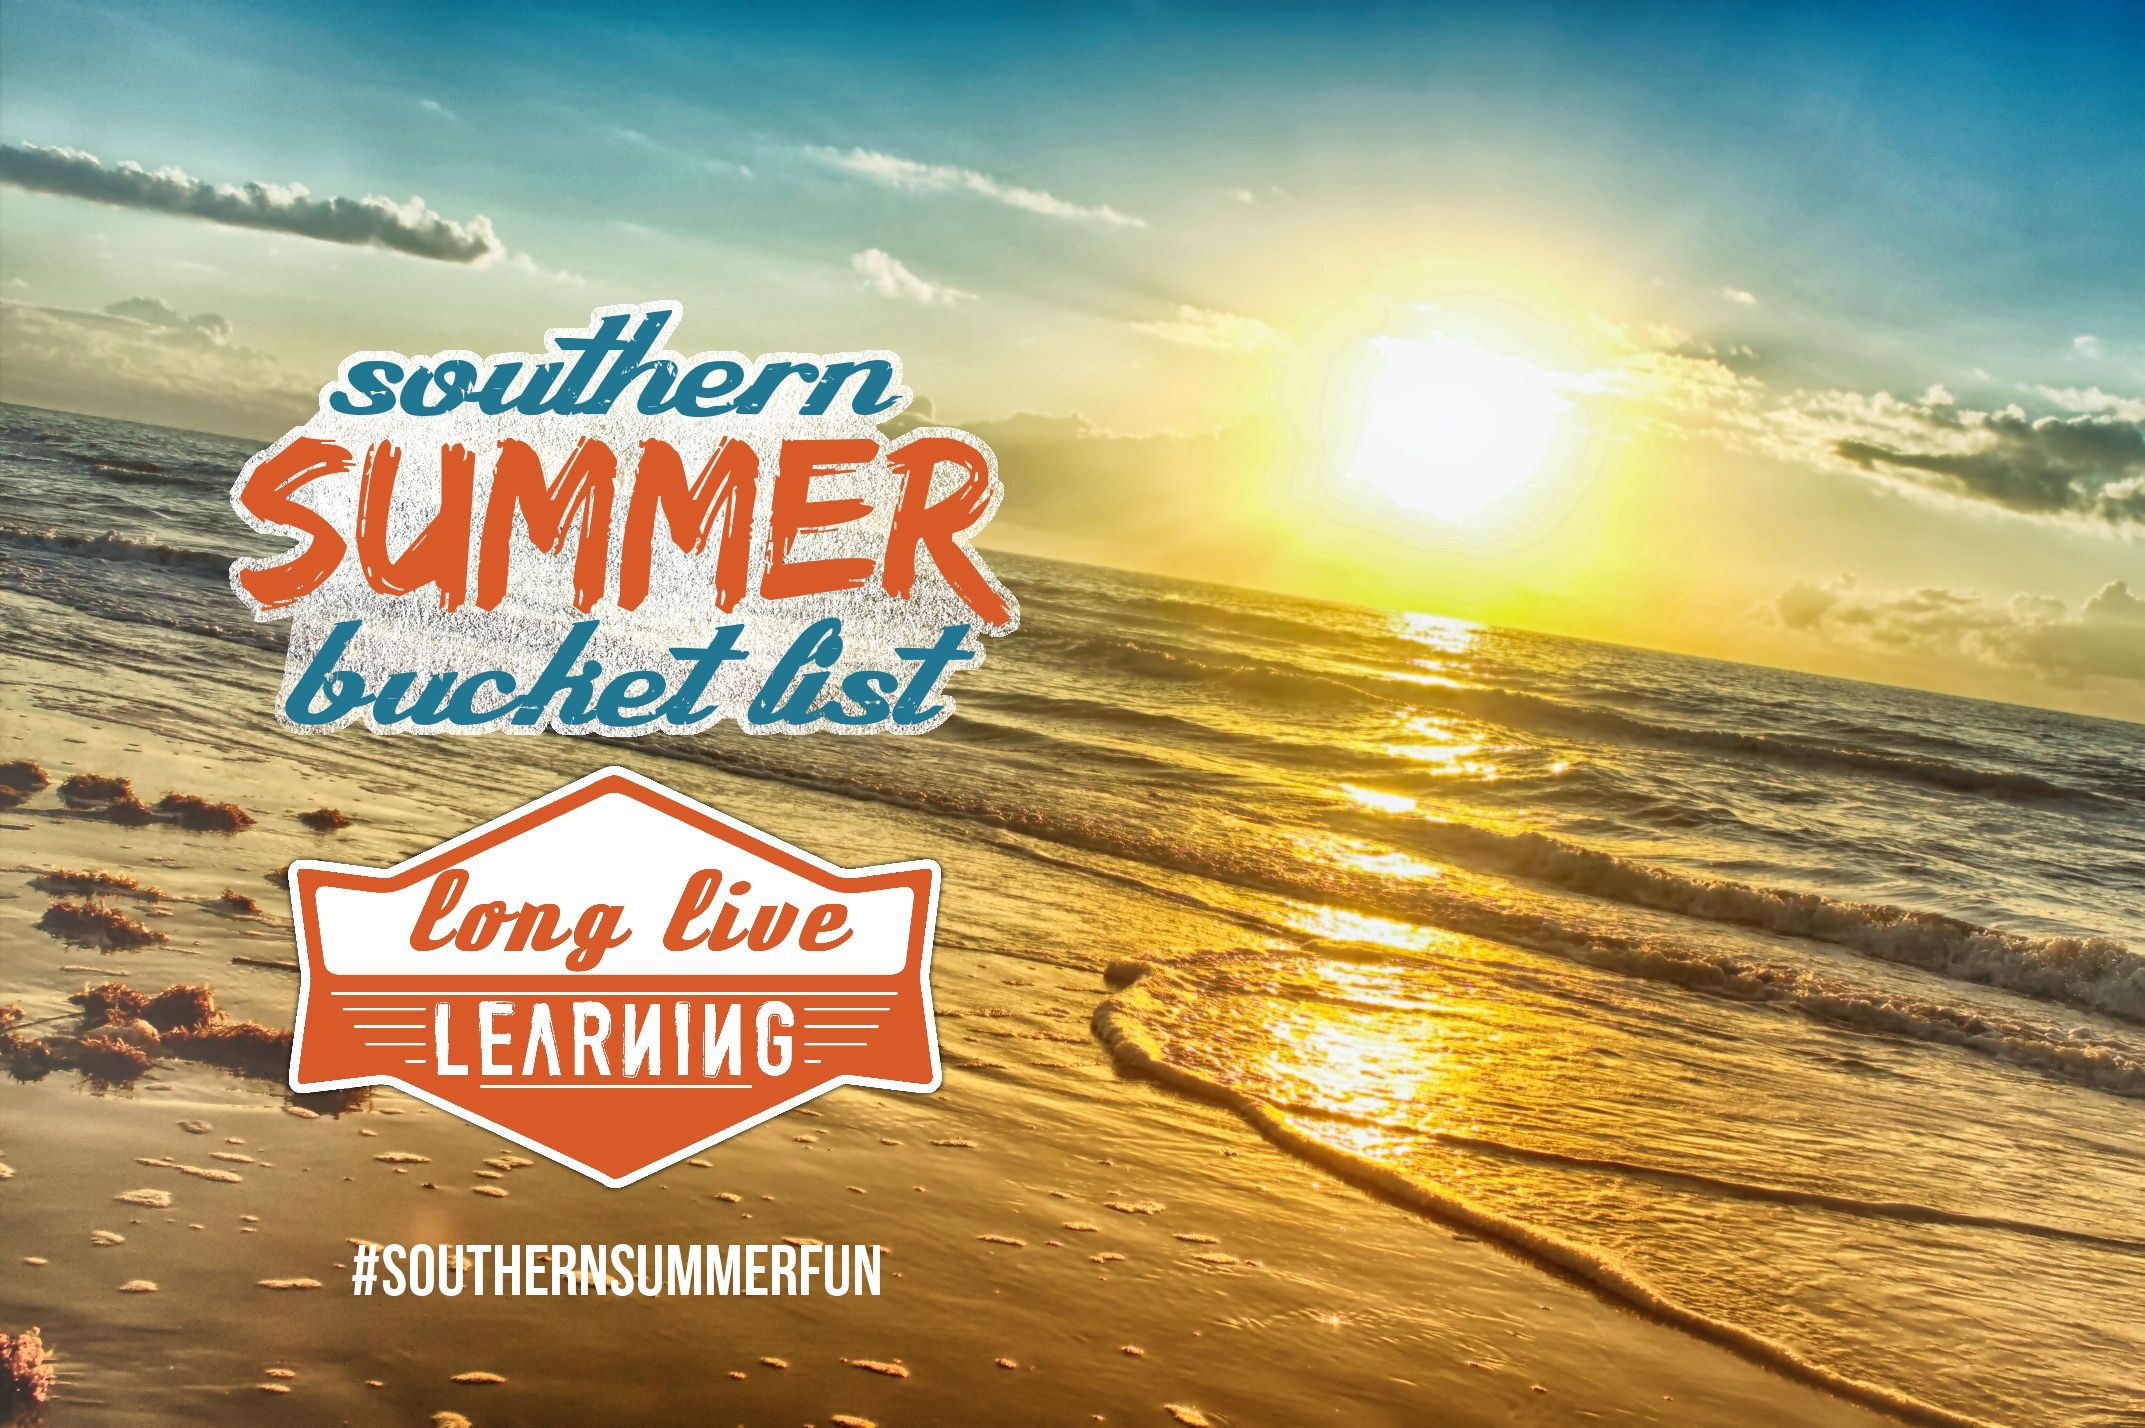 Southern Summer Bucket List Family Fun!